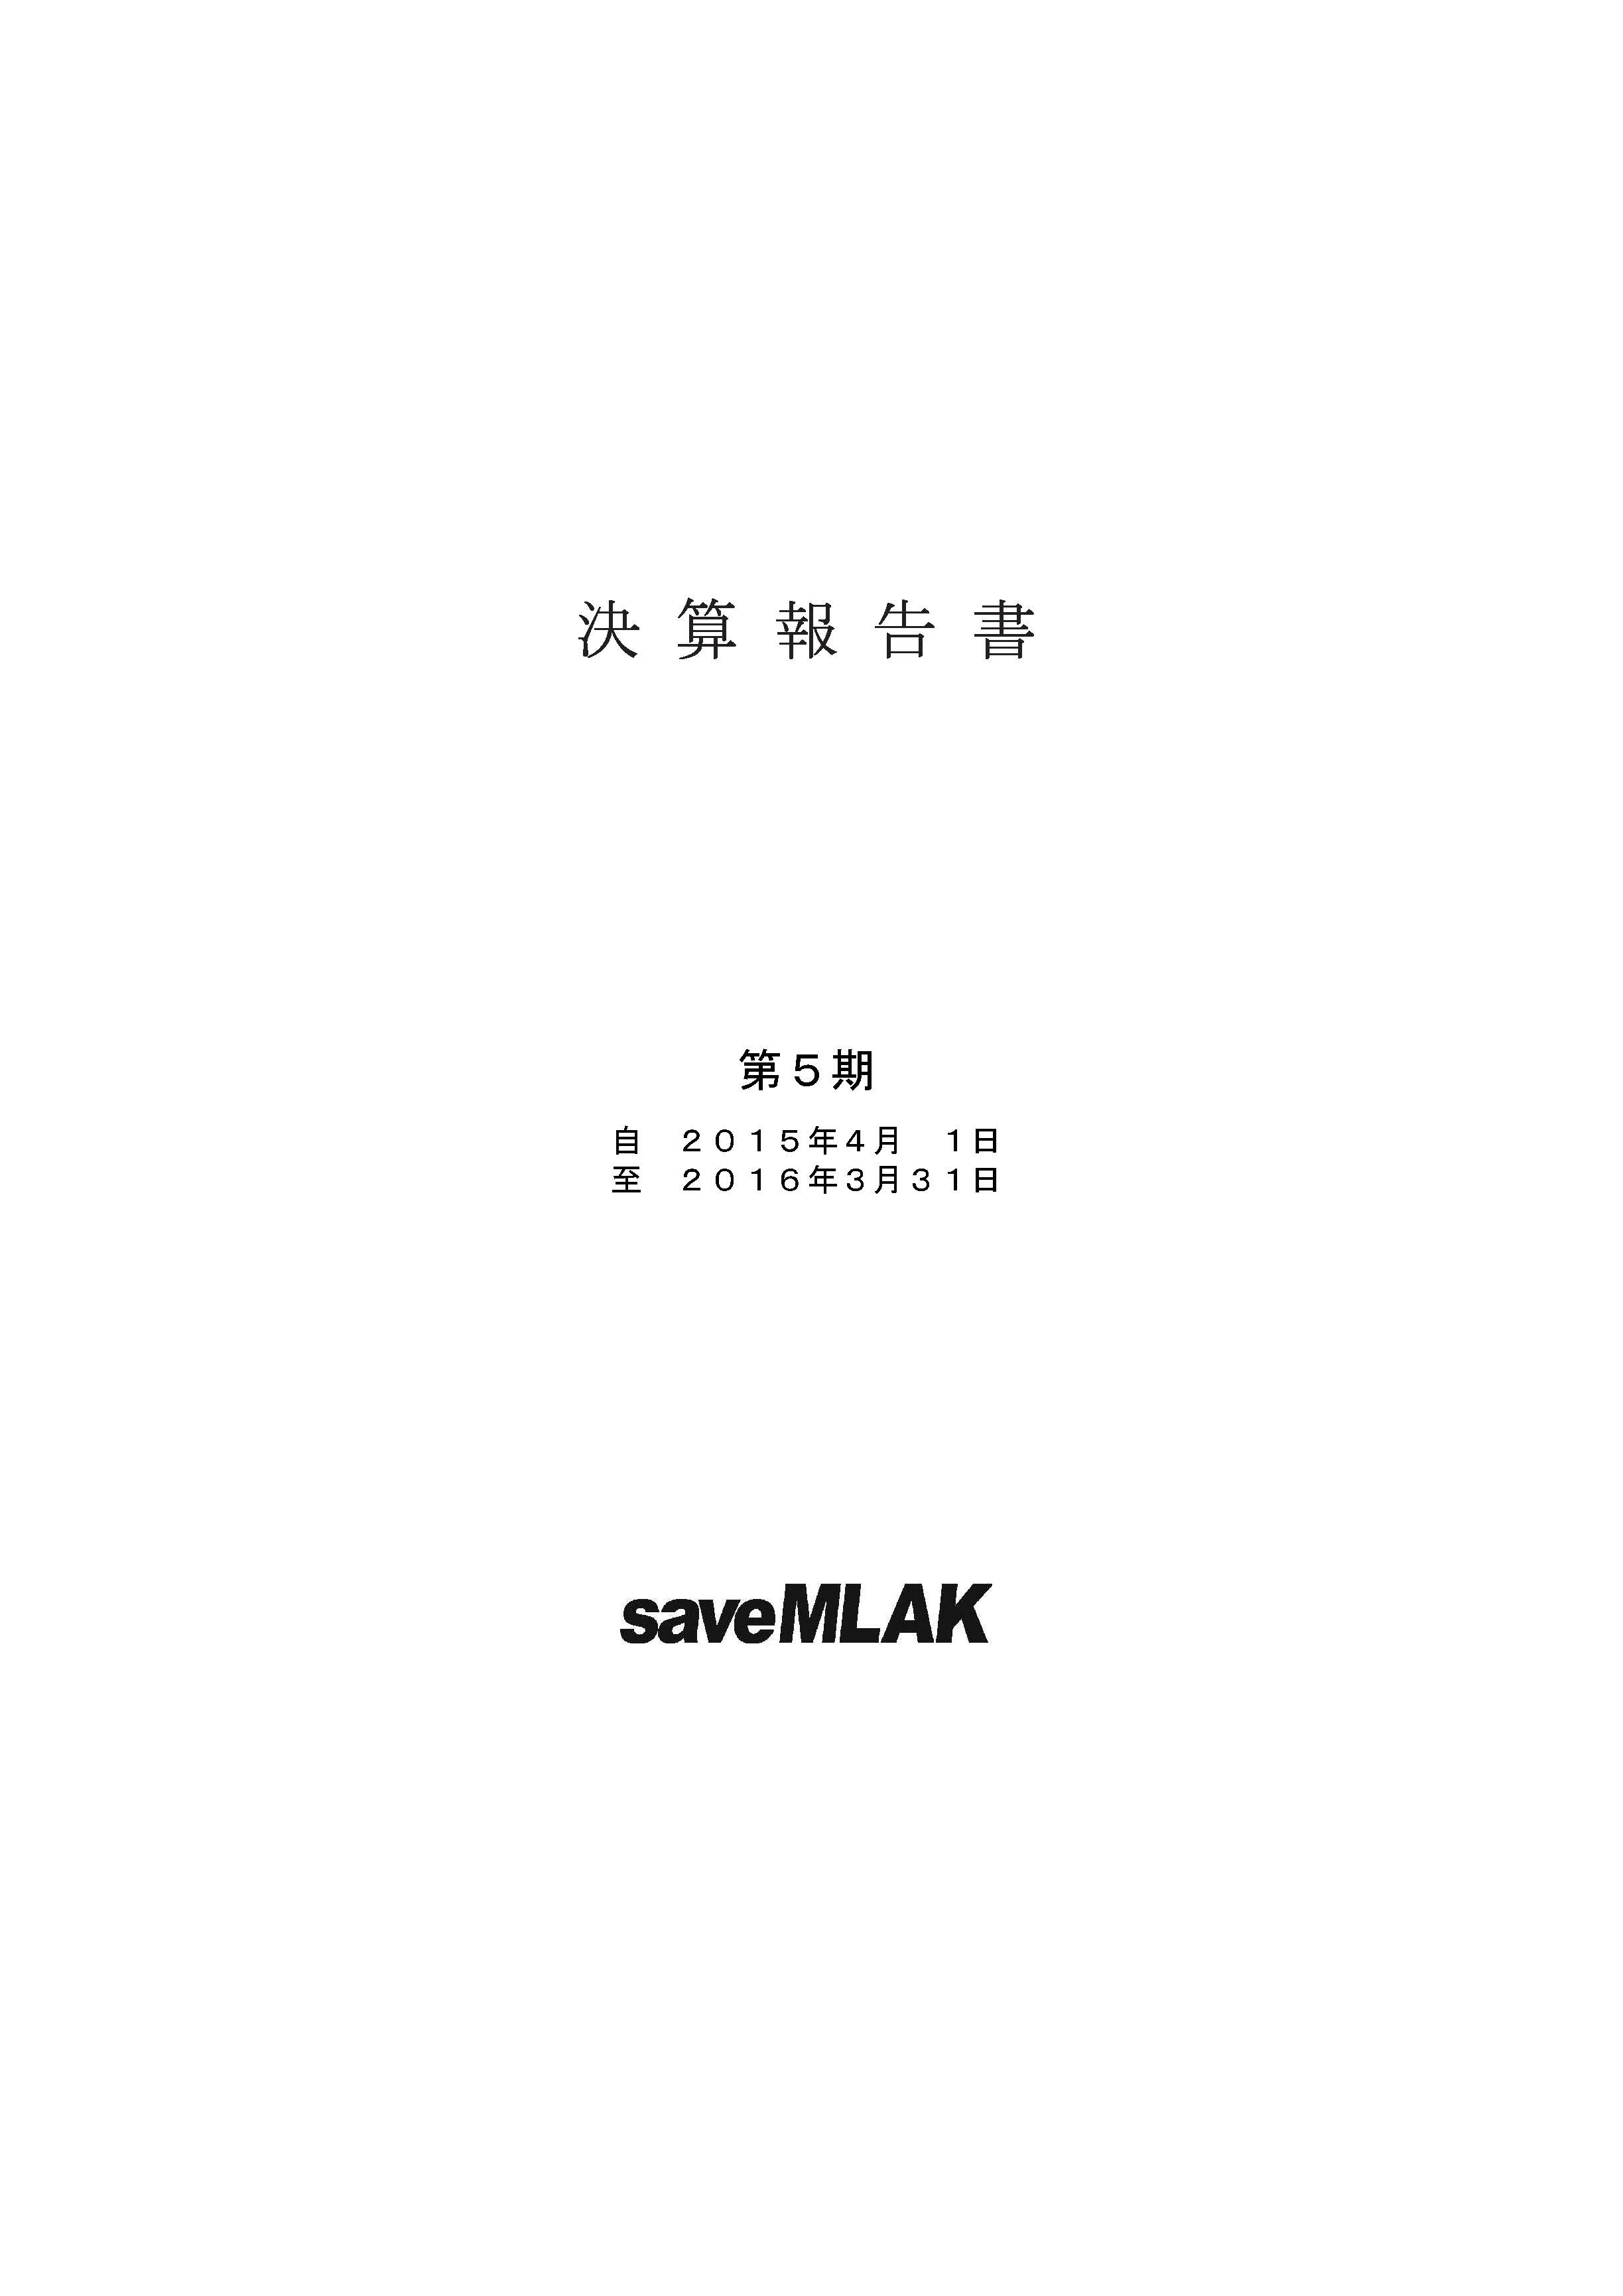 saveMLAK15年度決算報告書 ページ 1.jpg